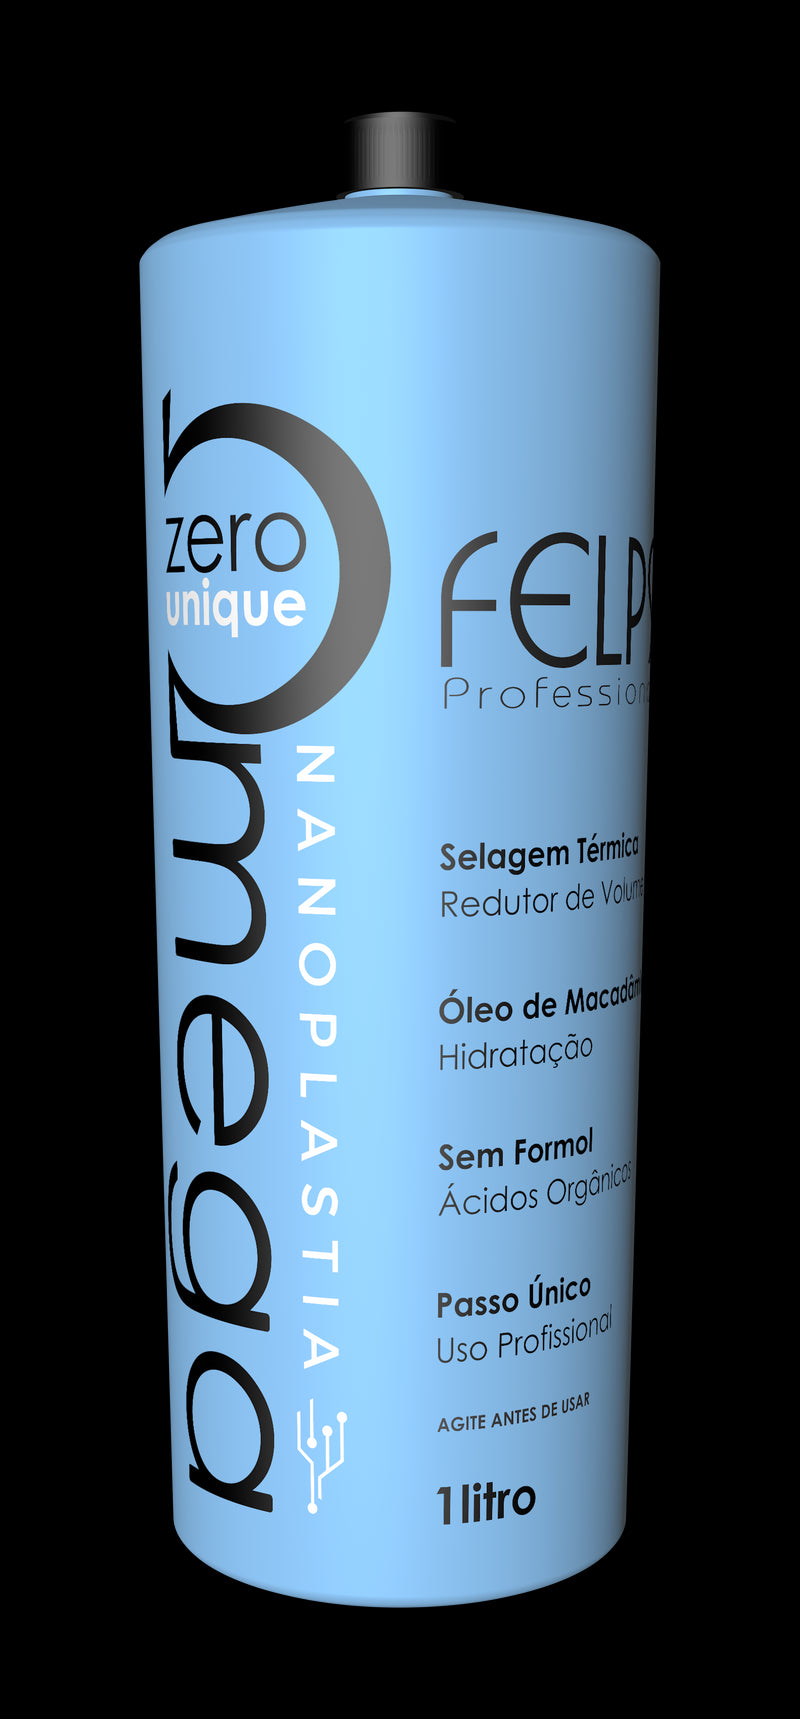 Felps Omega Zero Unique Nanoplastia Smoothing Treatment - Formaldehyde Free